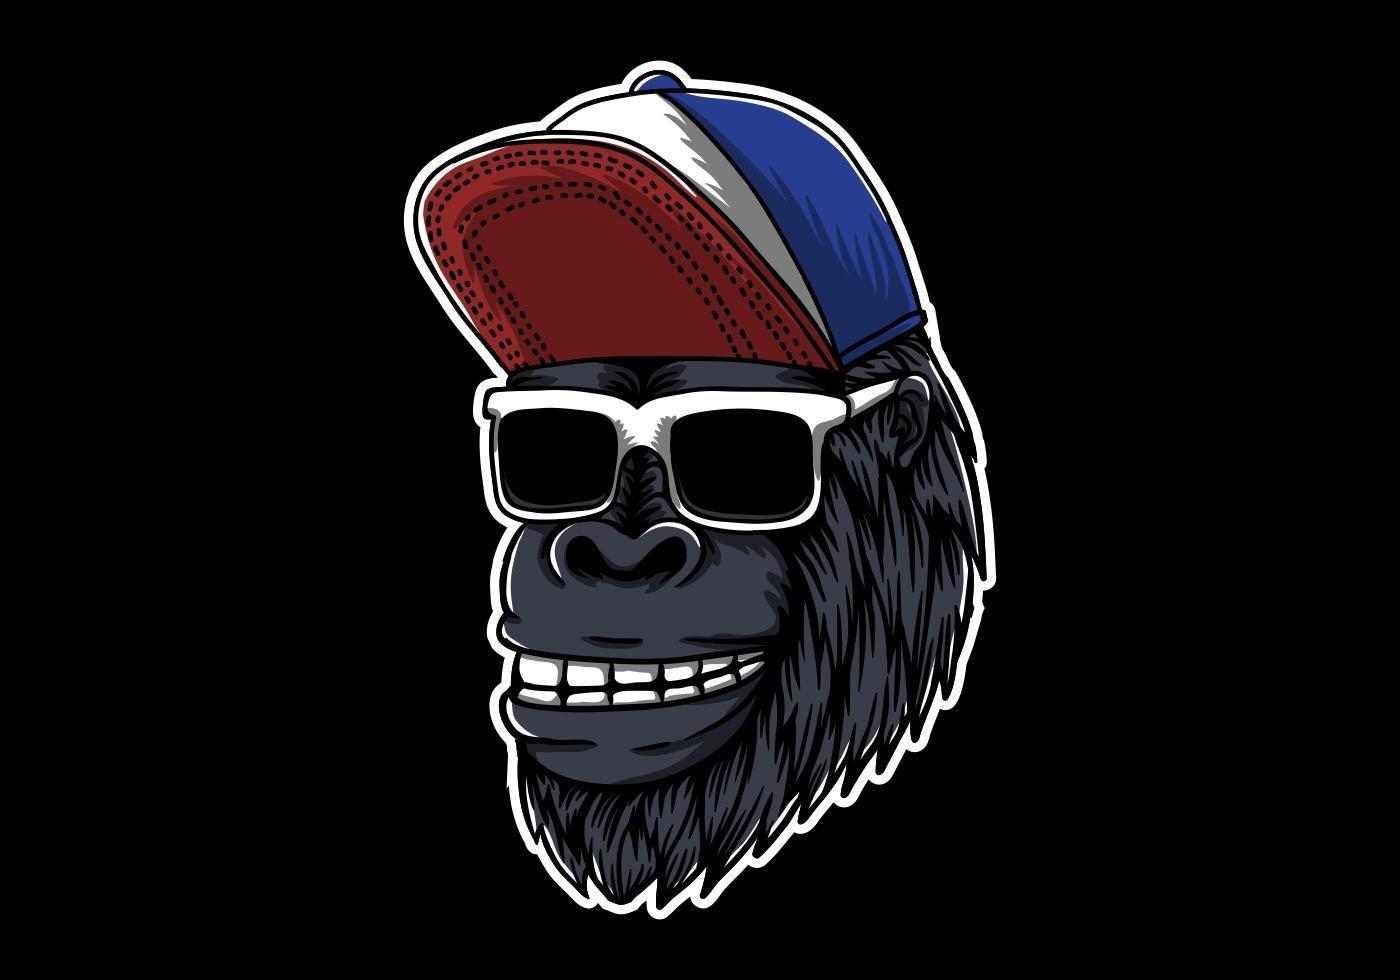 Gorilla Head Wearing Sunglasses Illustration vector